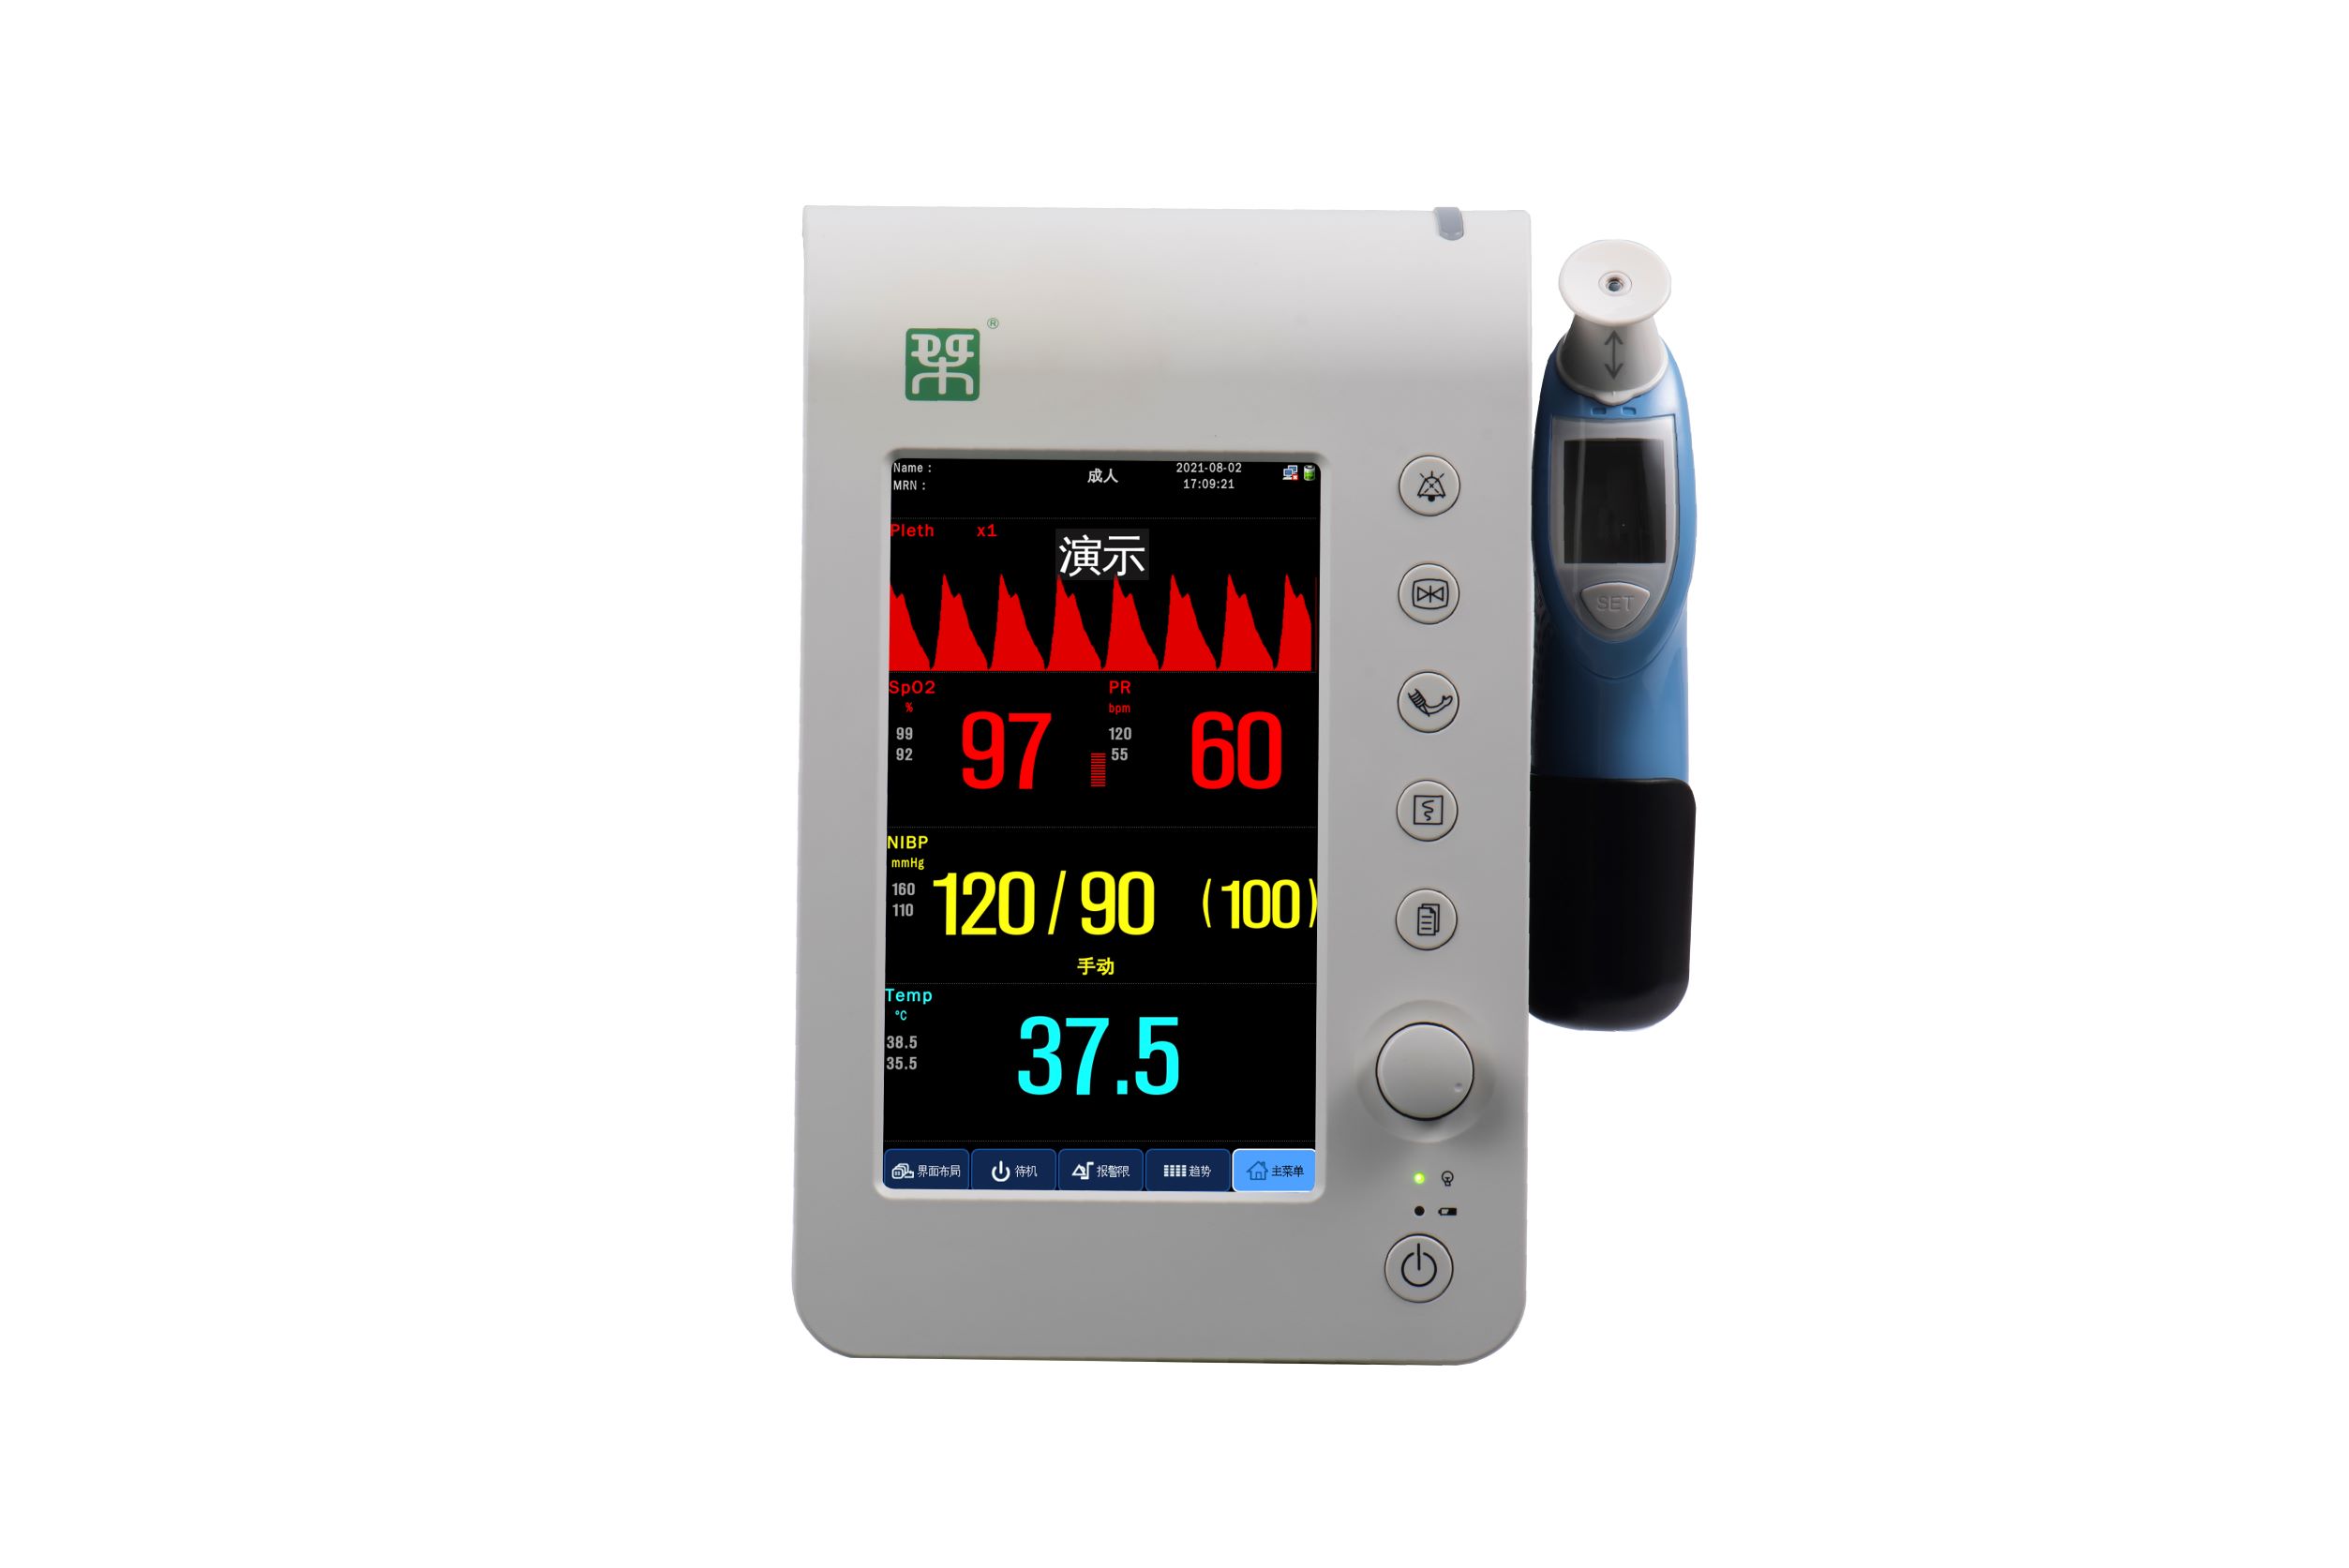 G3R vital signs monitor